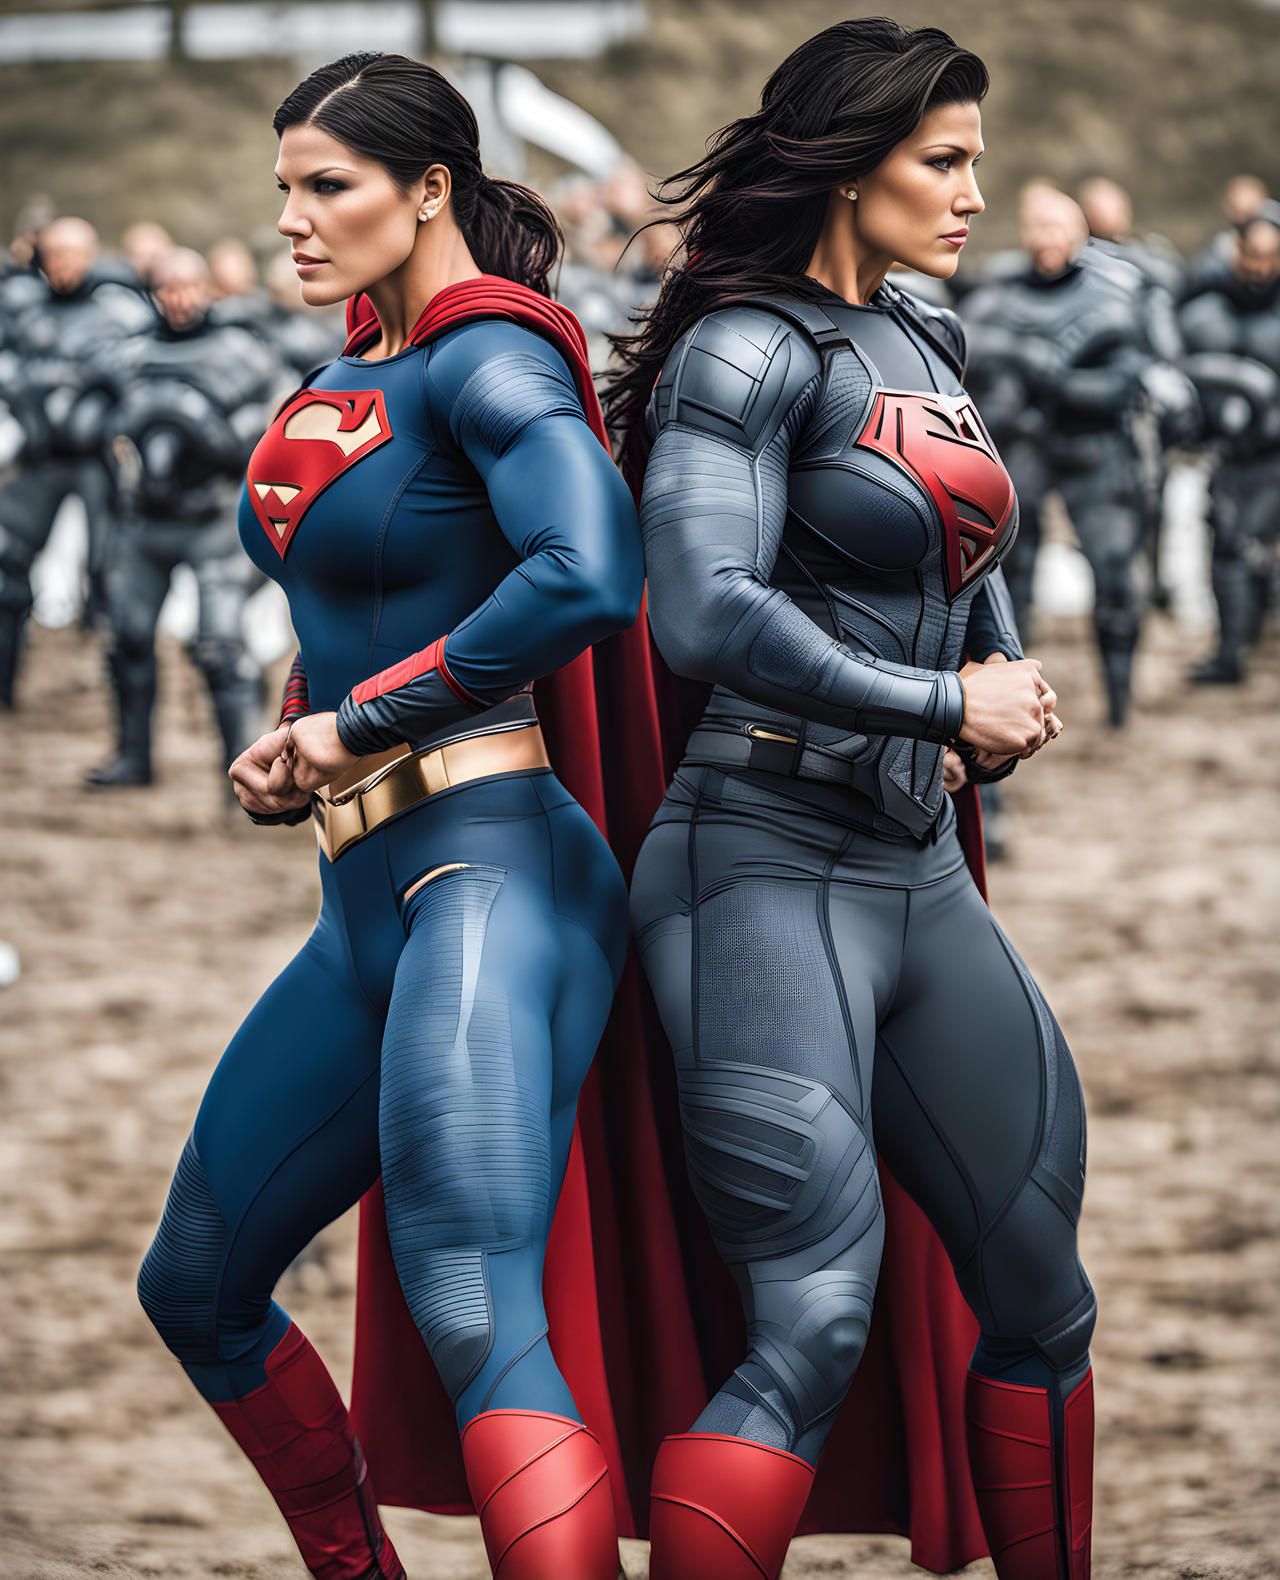 In Battle - Superwomen from Earth 08 and Earth 13 by Priyasneha on  DeviantArt